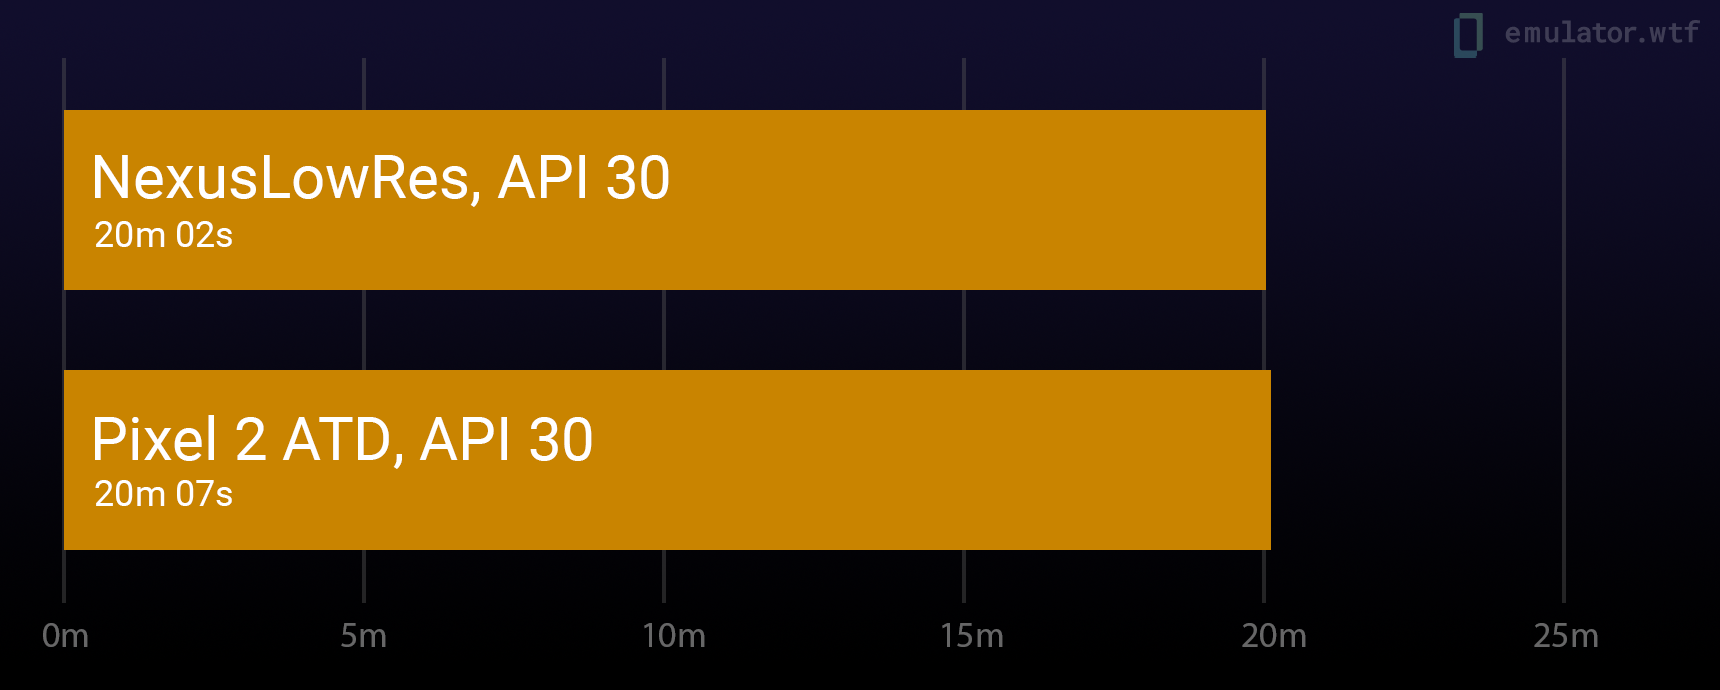 A side-by-side comparison of NexusLowRes API 30 (20m test duration) vs Pixel2 API 30 Atd (20m test duration)